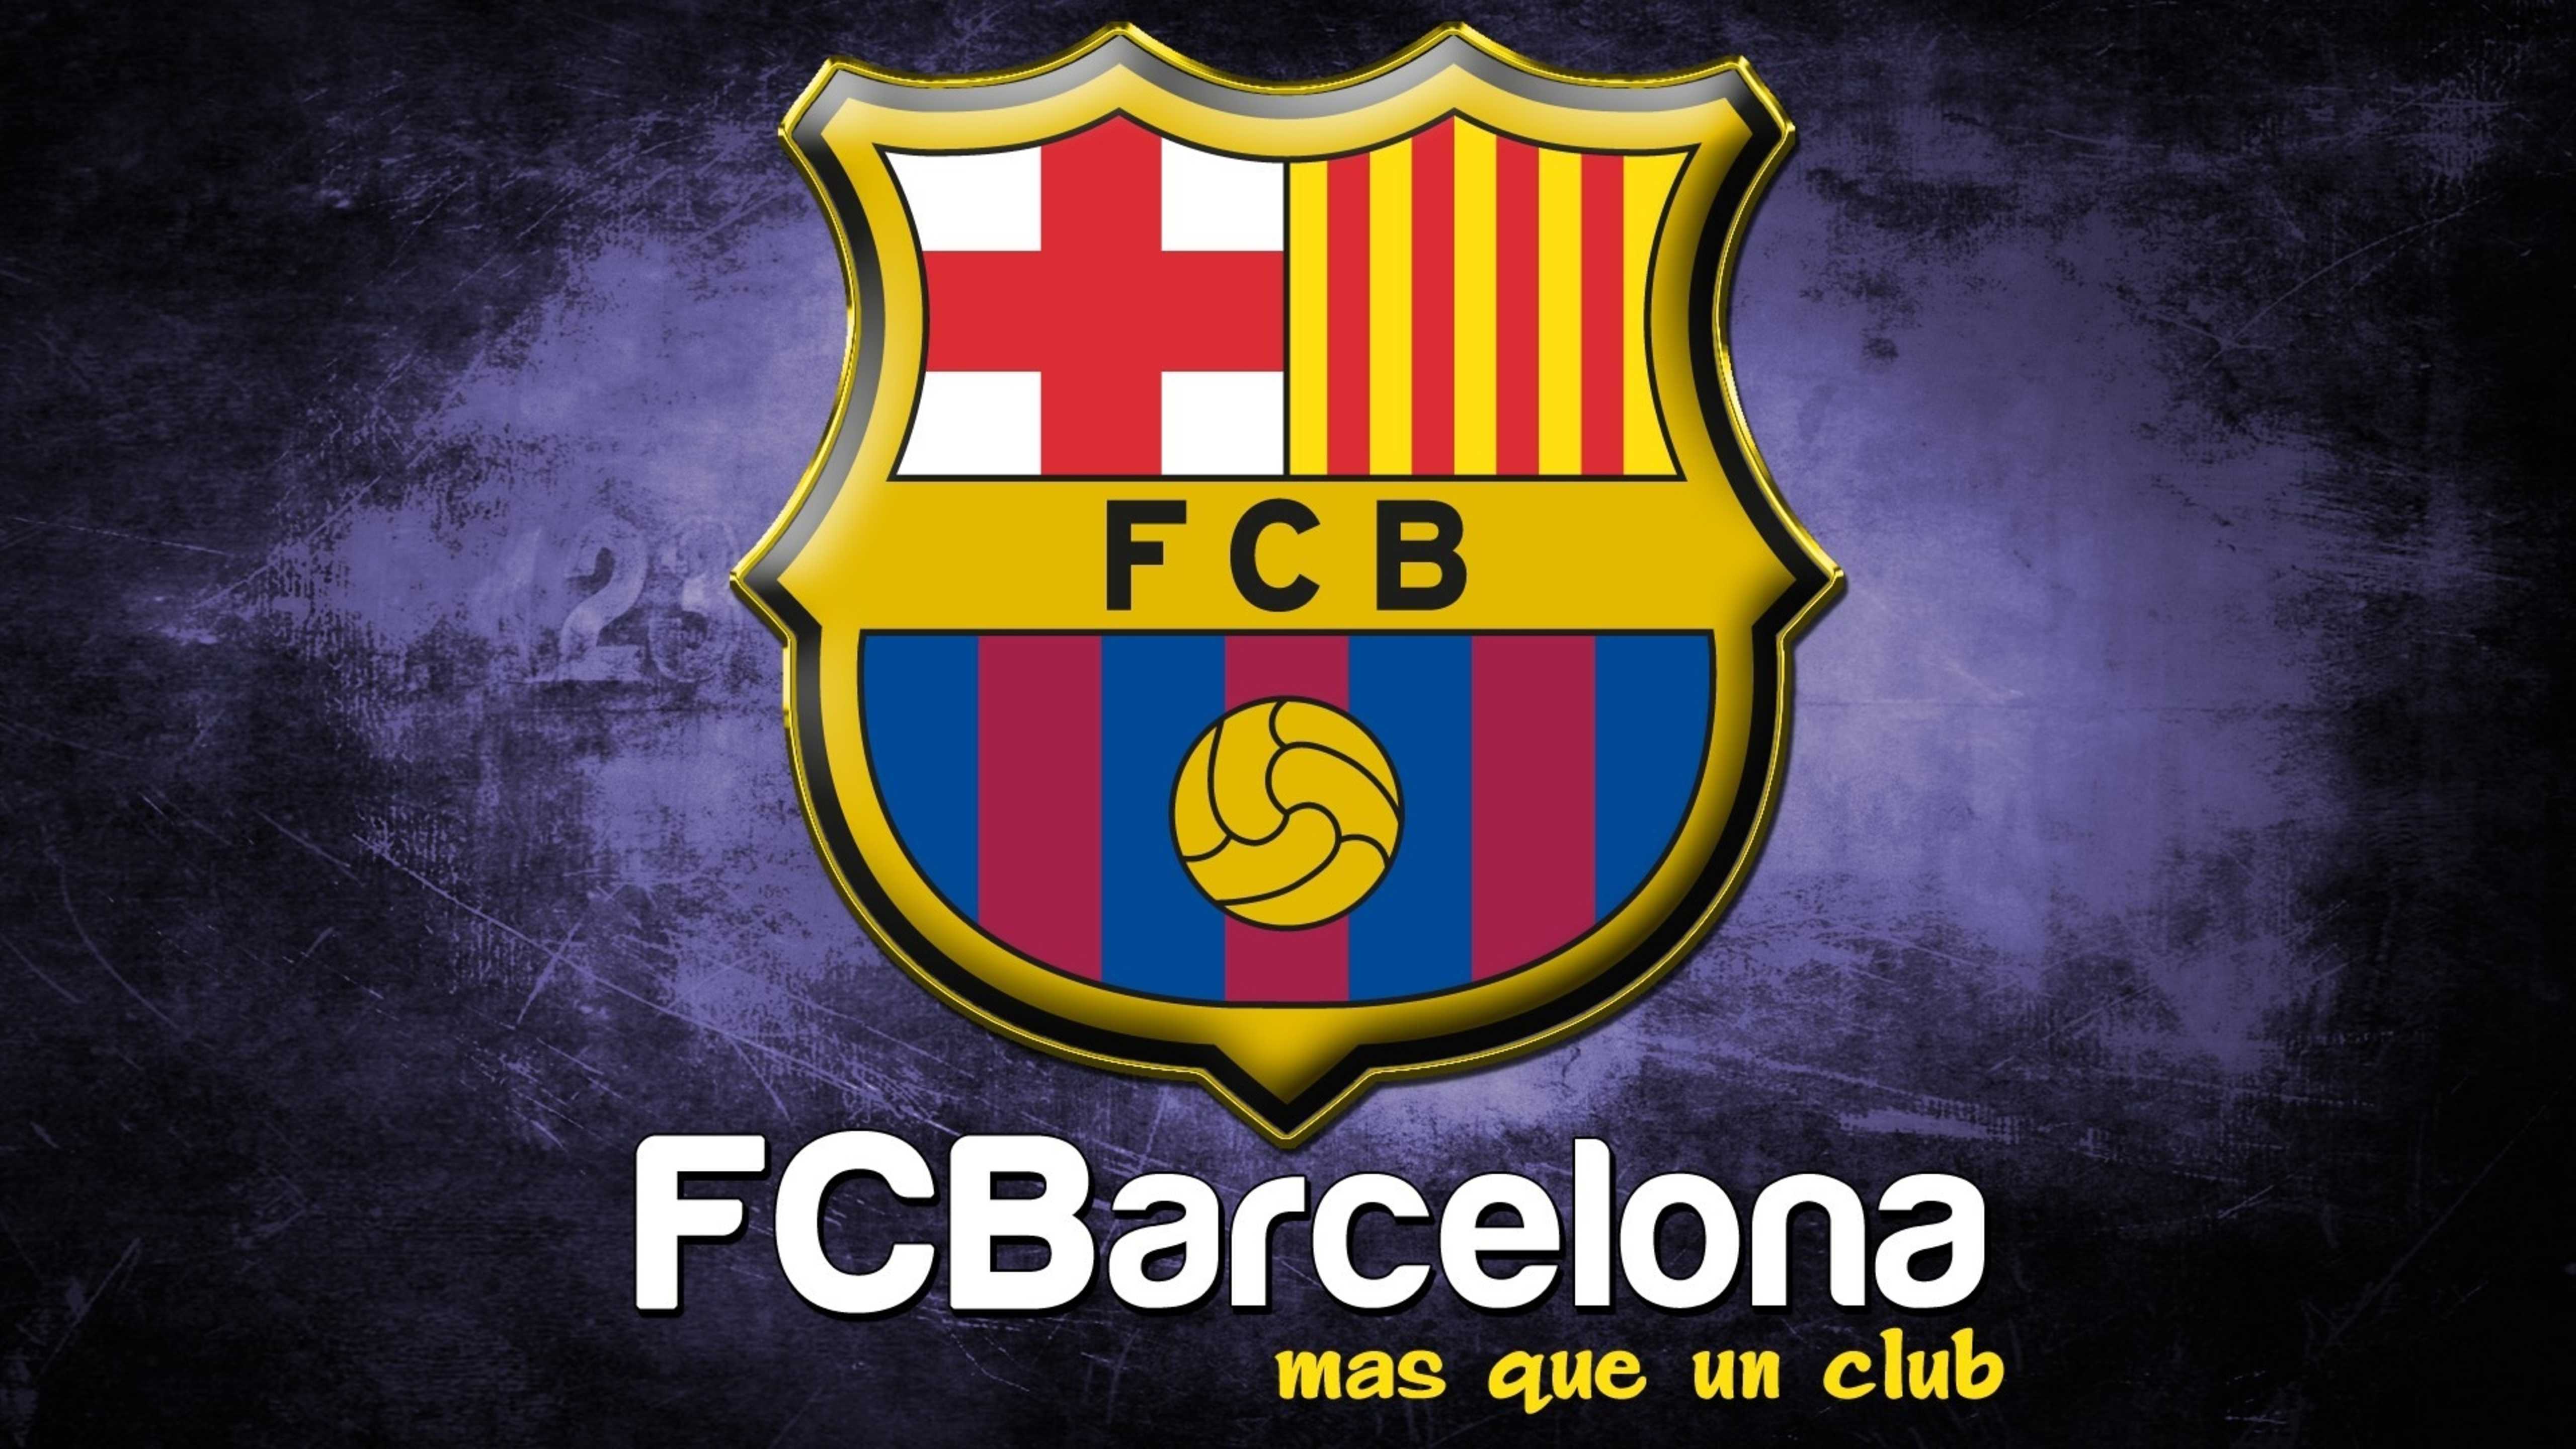 FCB Barcelona Football Club LOGO HD Wallpaper